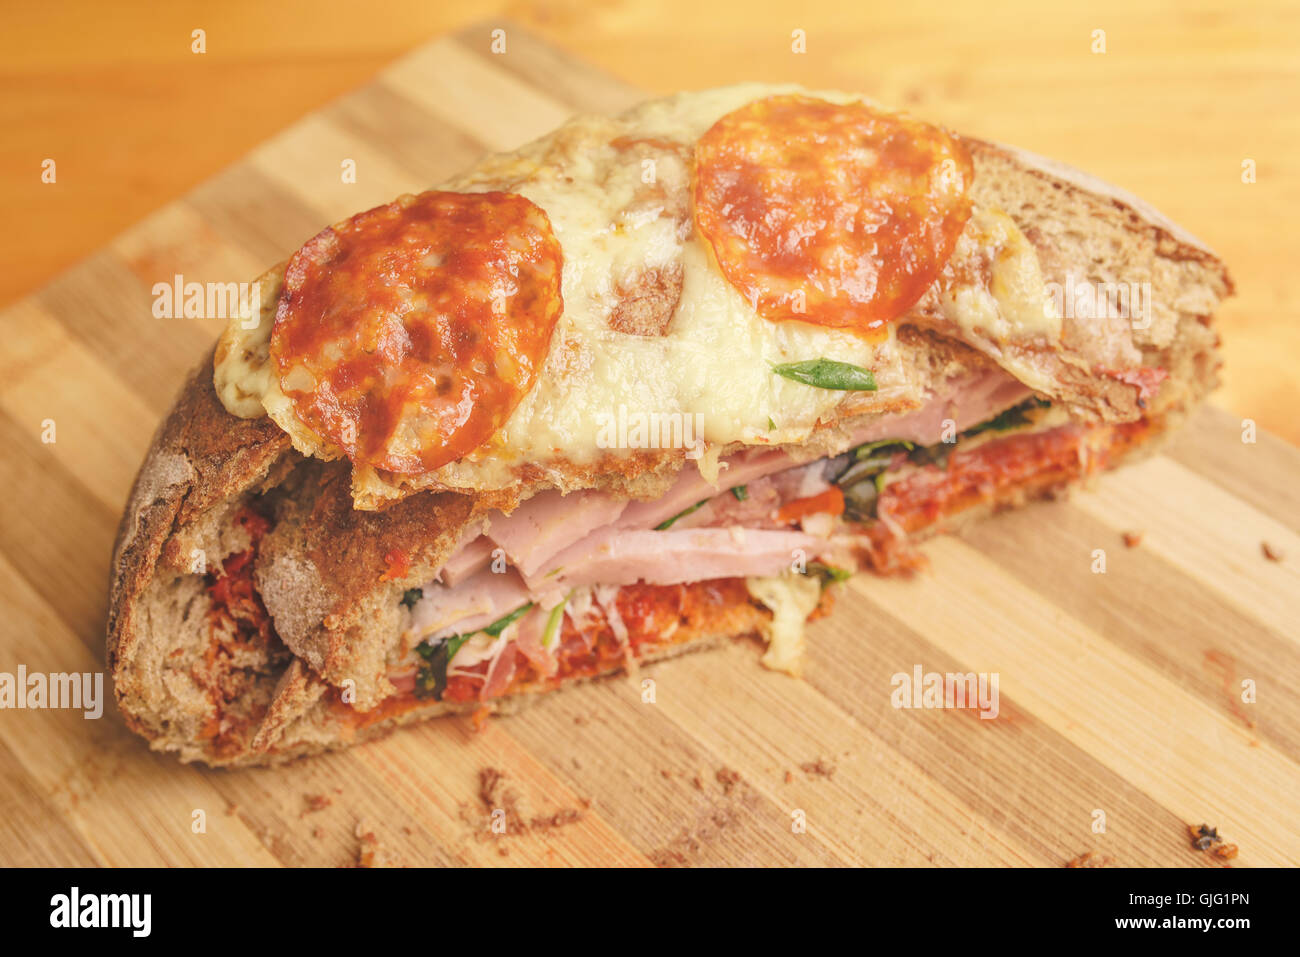 Tasty homemade sandwich on kitchen cutting board Stock Photo